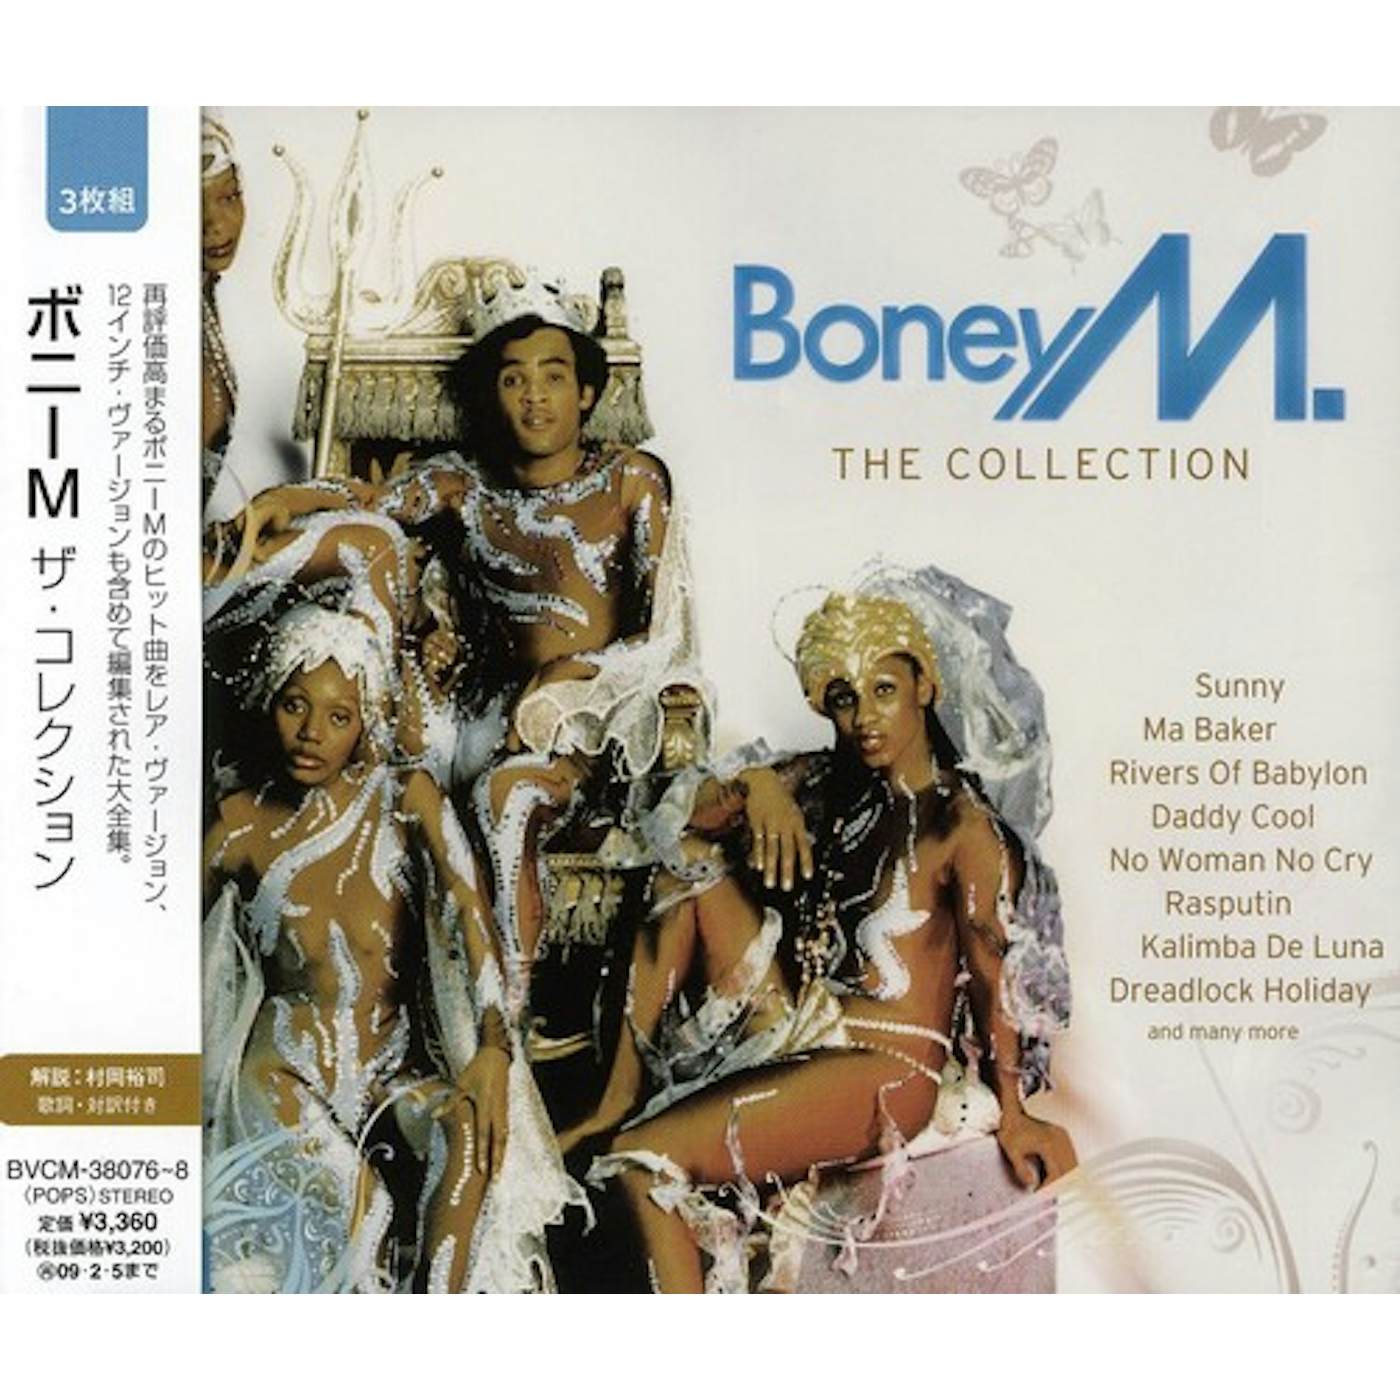 Boney M. BEST COLLECTION CD